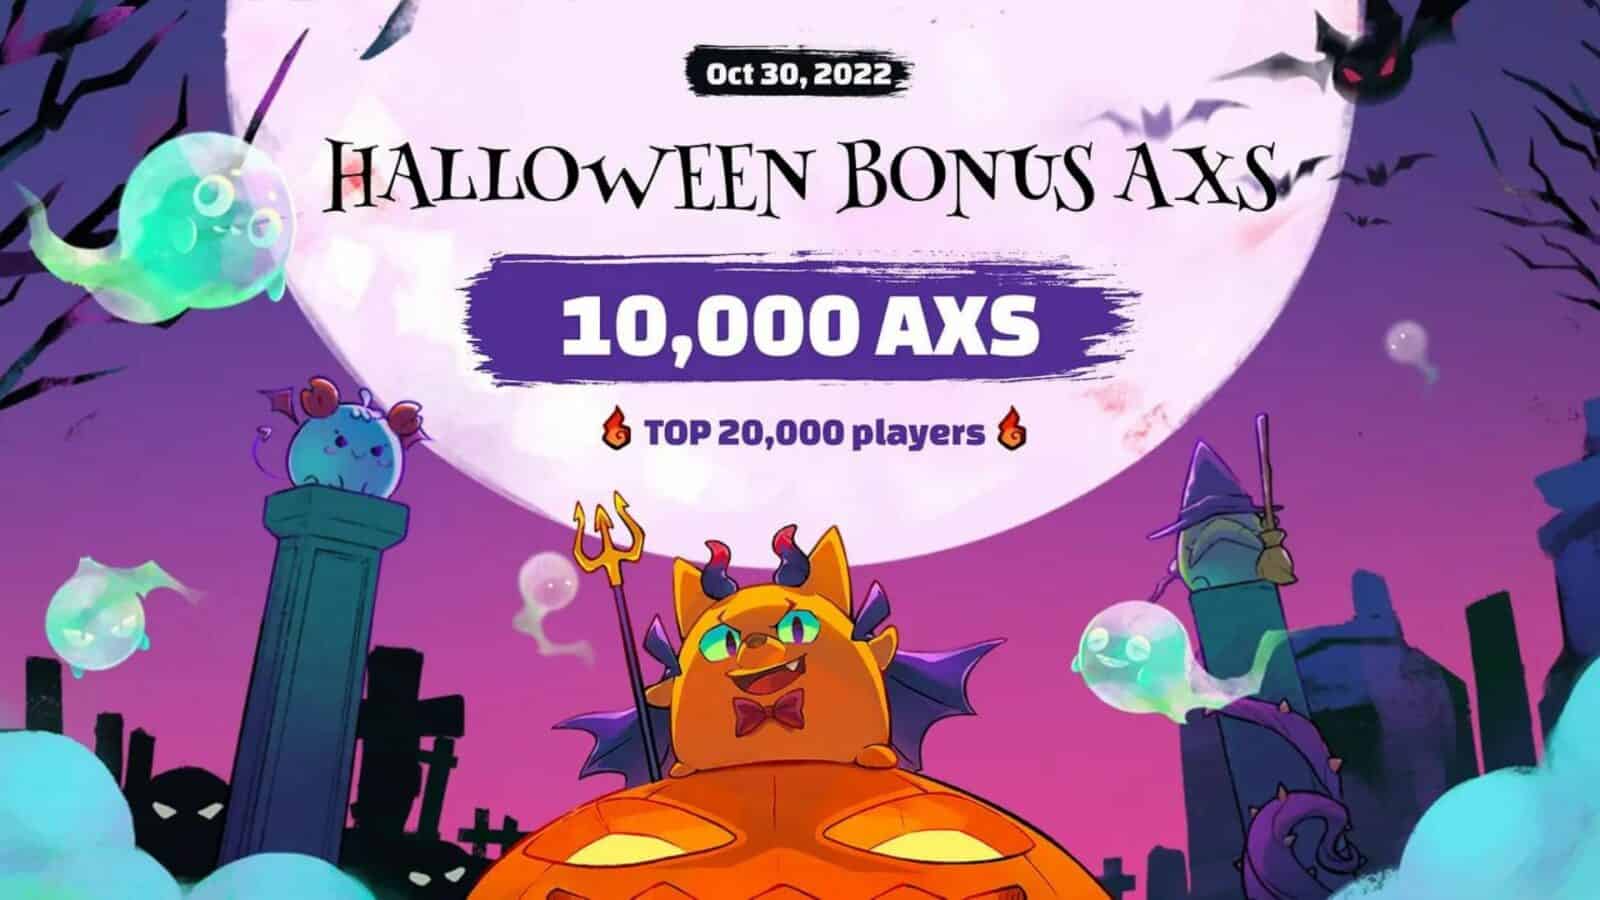 Axie Infinity Announces Halloween Bonus AXS Leaderboard Rewards